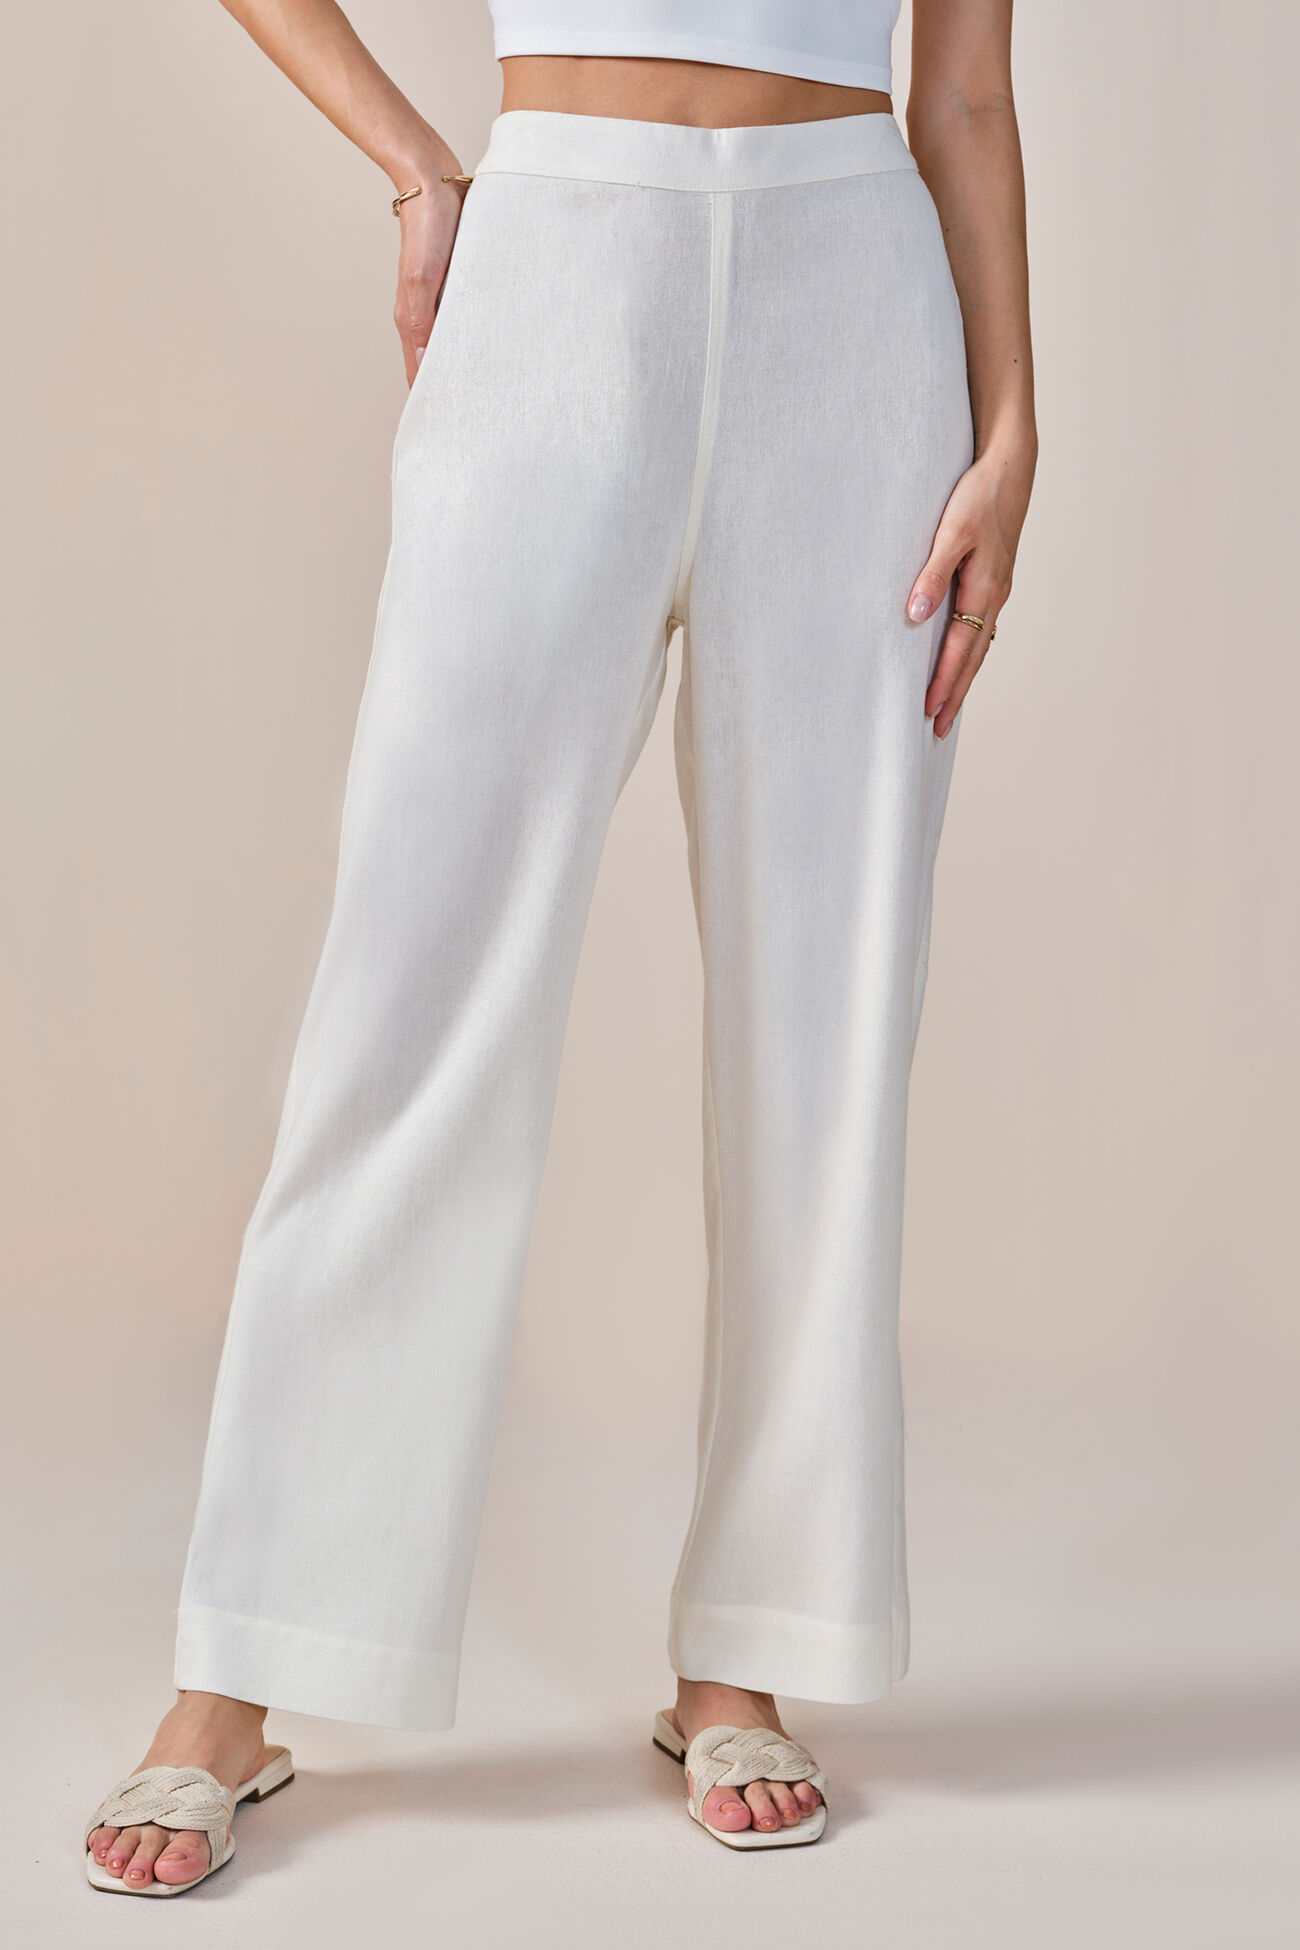 Impression Mode Linen Viscose Blend Trousers, White, image 3